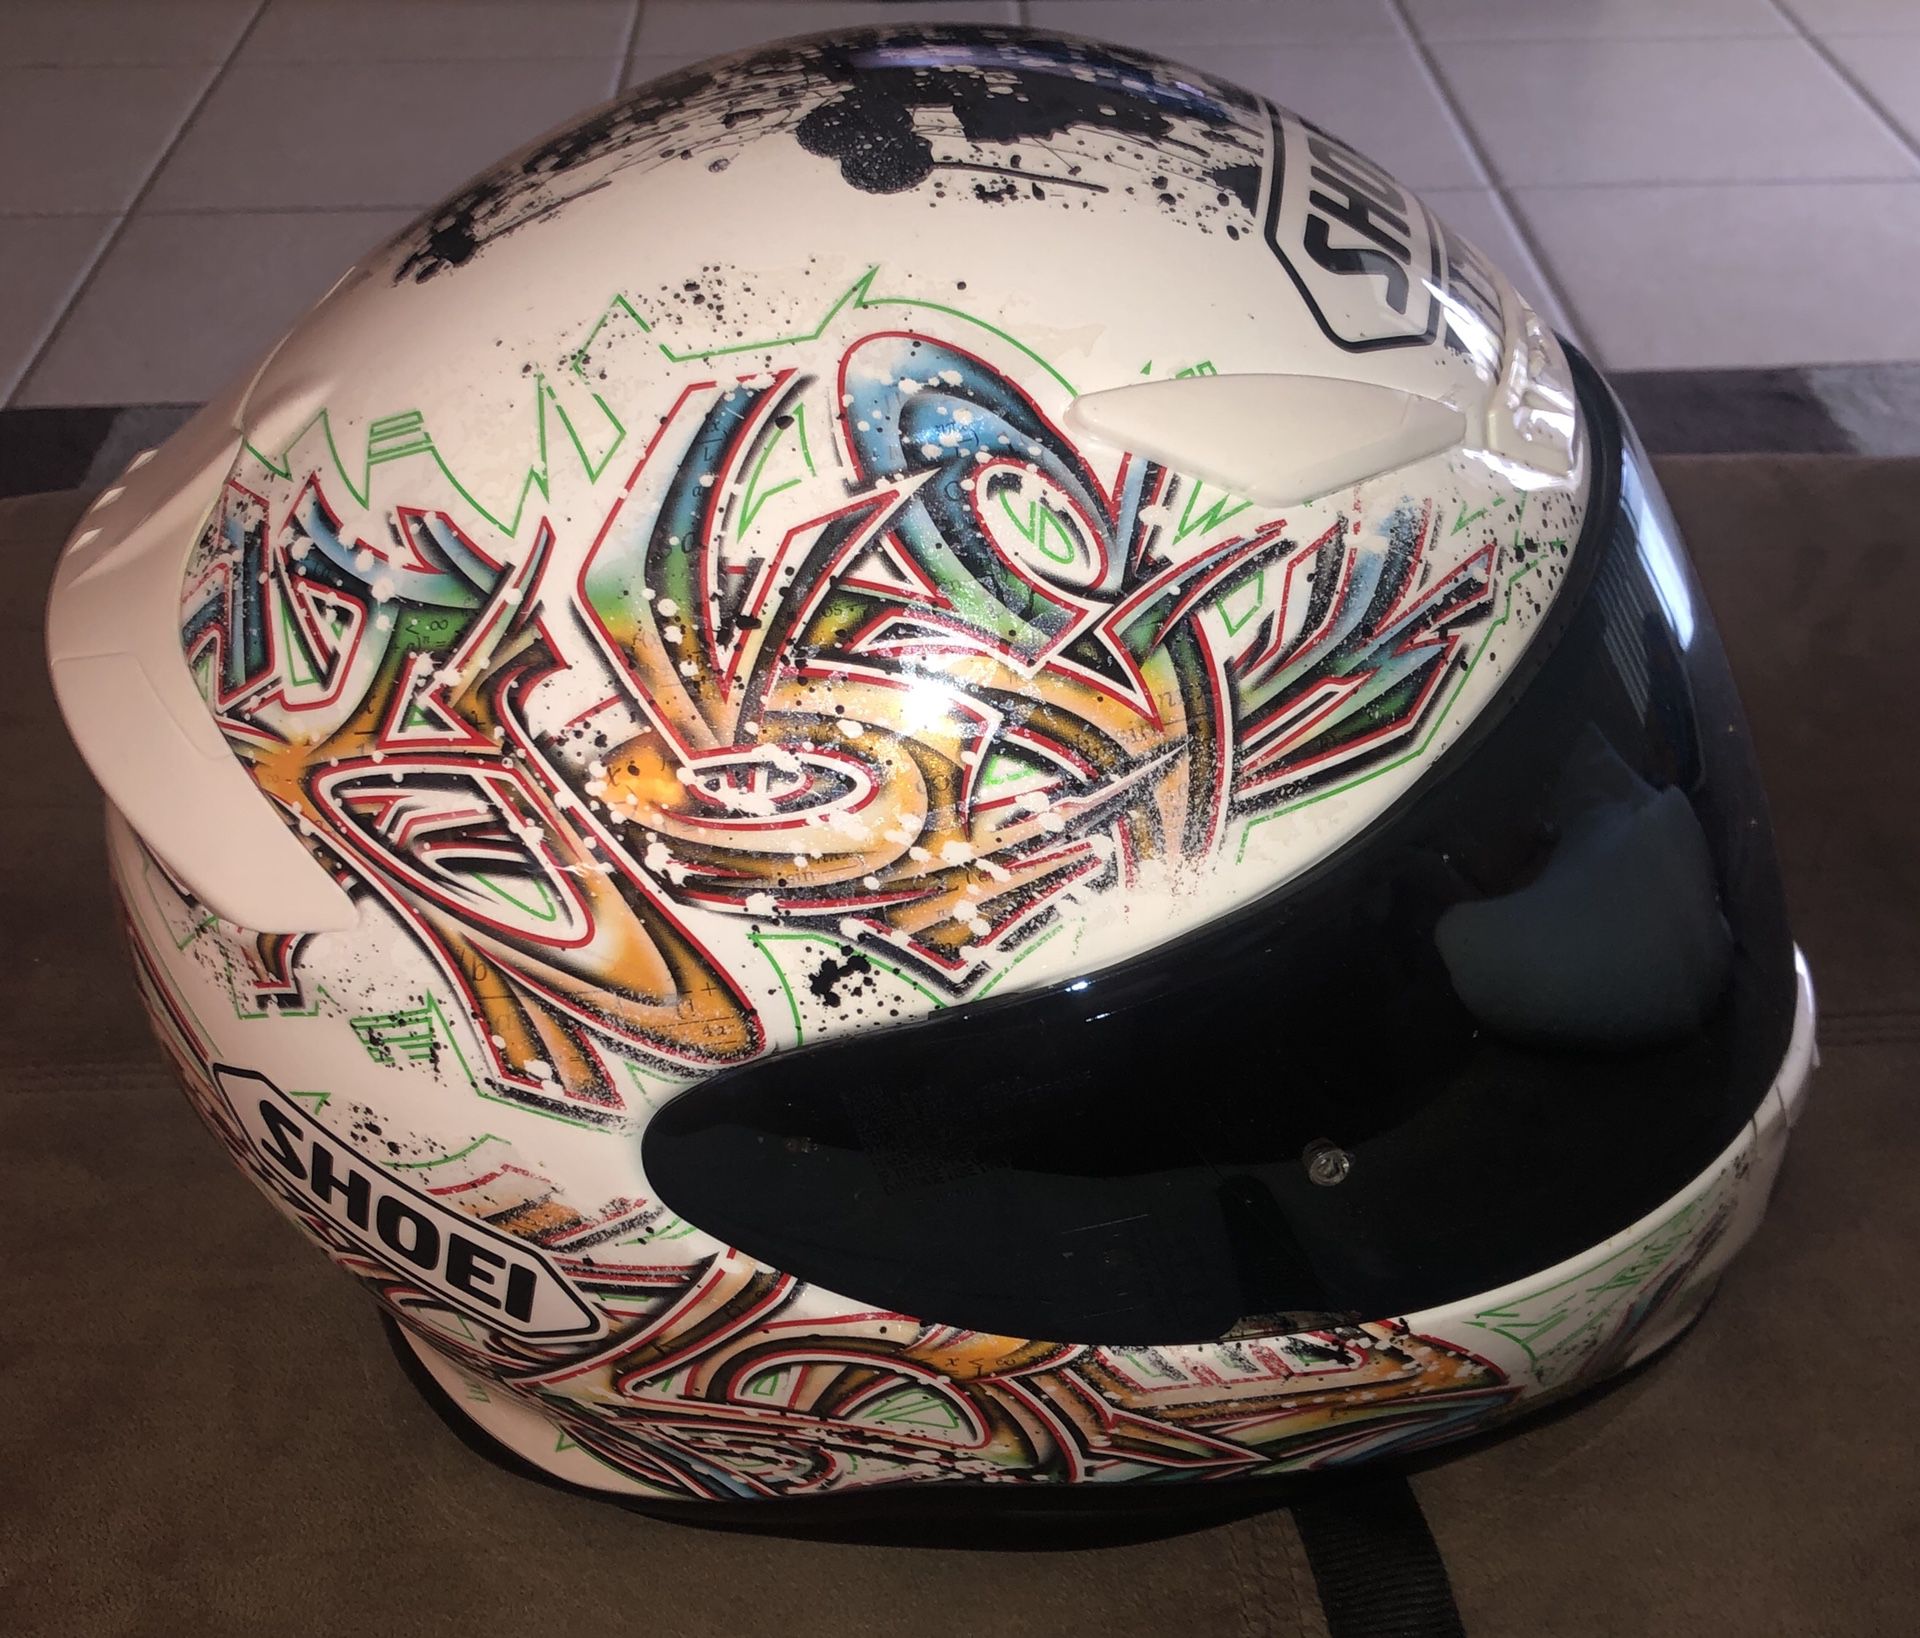 Shoei RF-1200 Graffiti Motorcycle Helmet